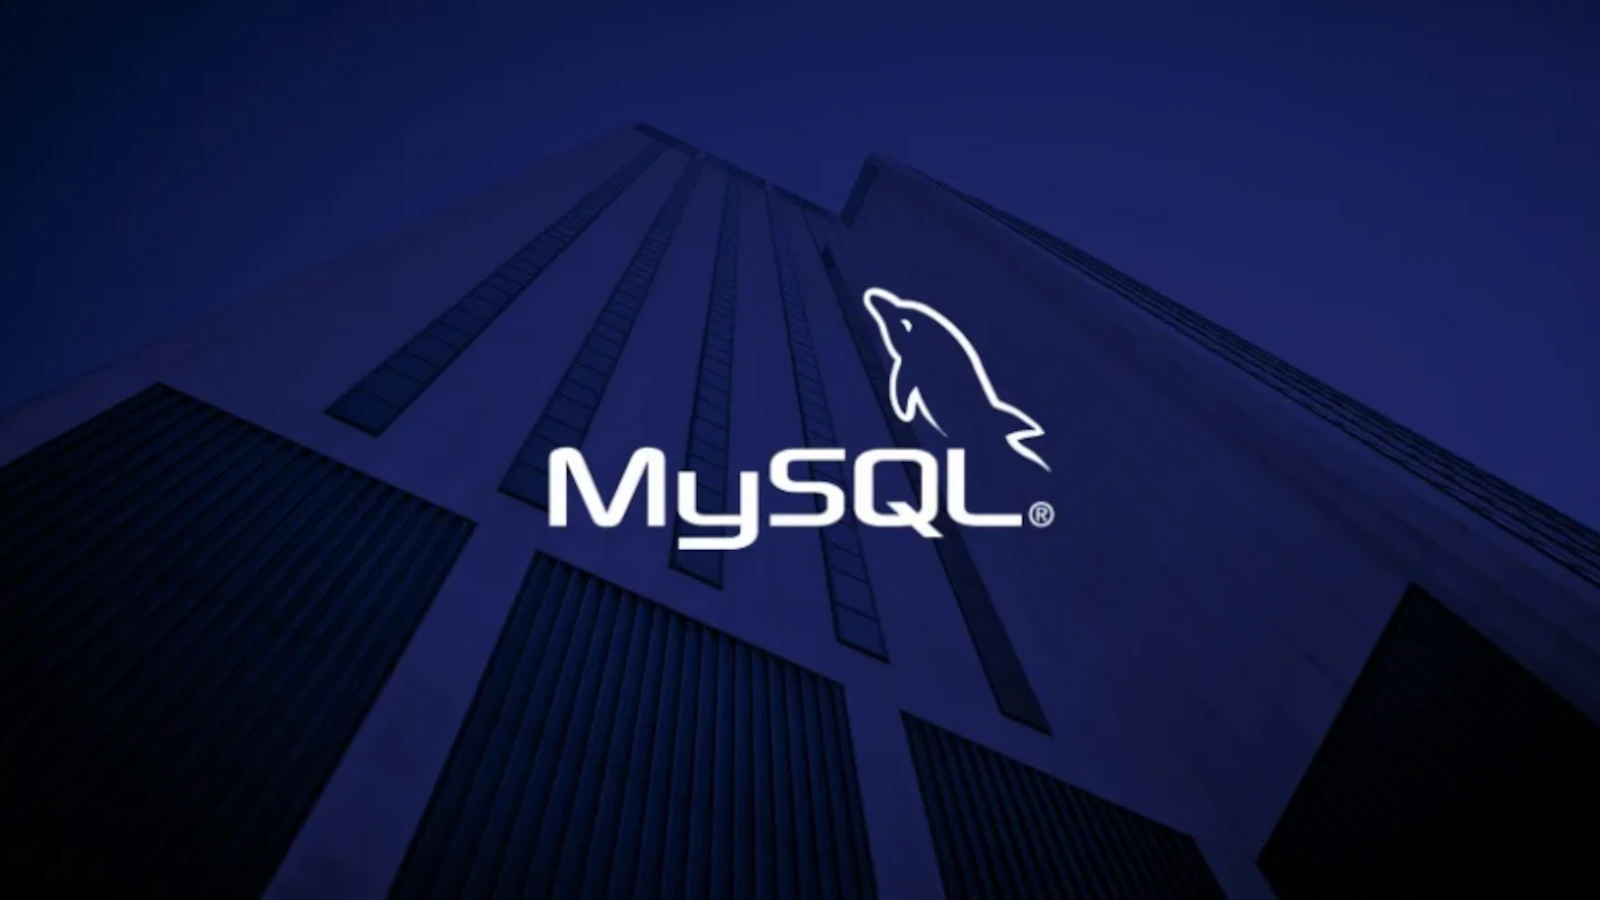 Over 3.6 million MySQL servers found exposed on the Internet